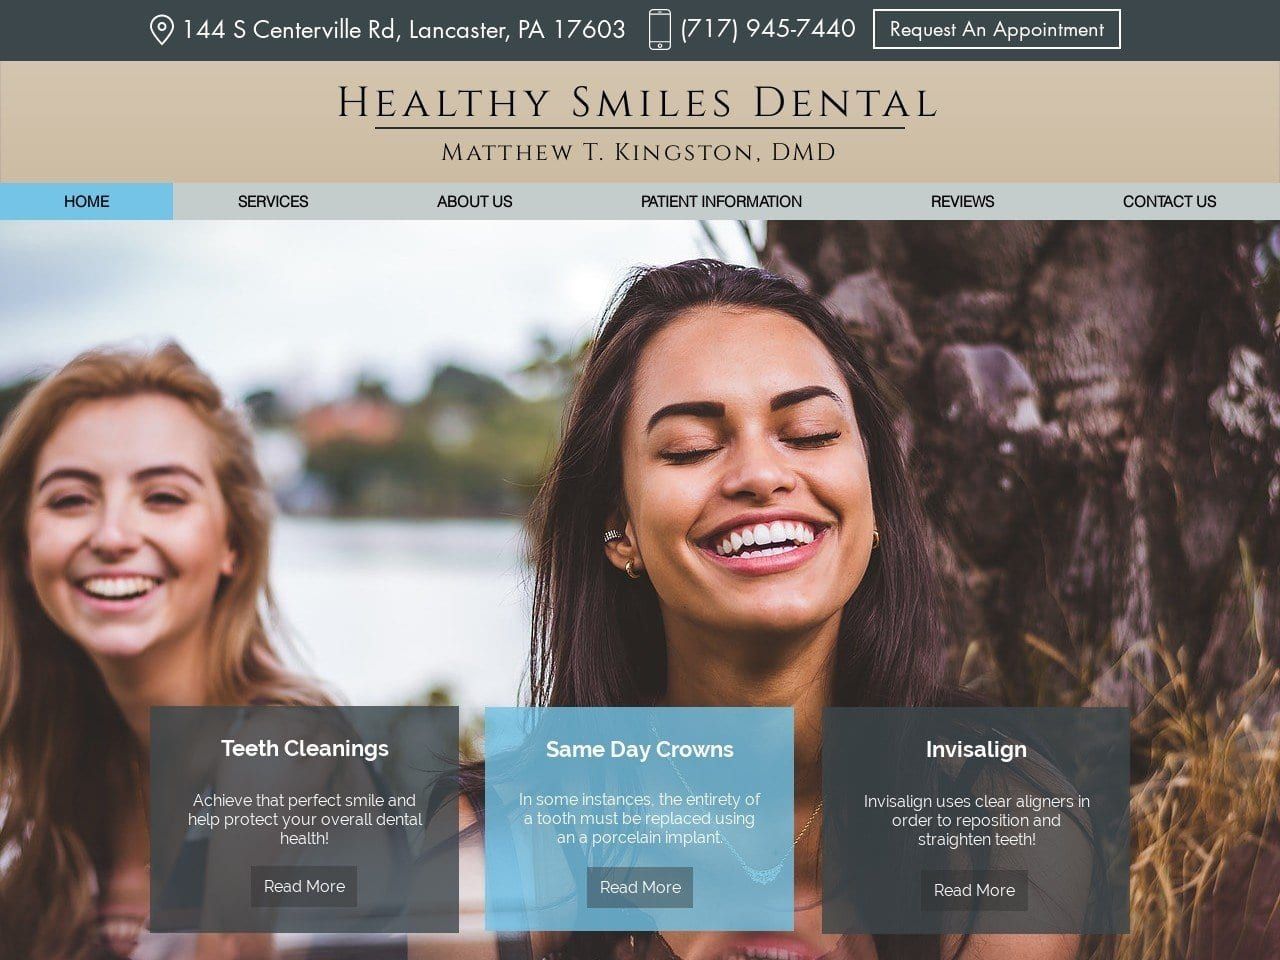 Healthy Smiles Dental Website Screenshot from healthysmilesdentalpa.com